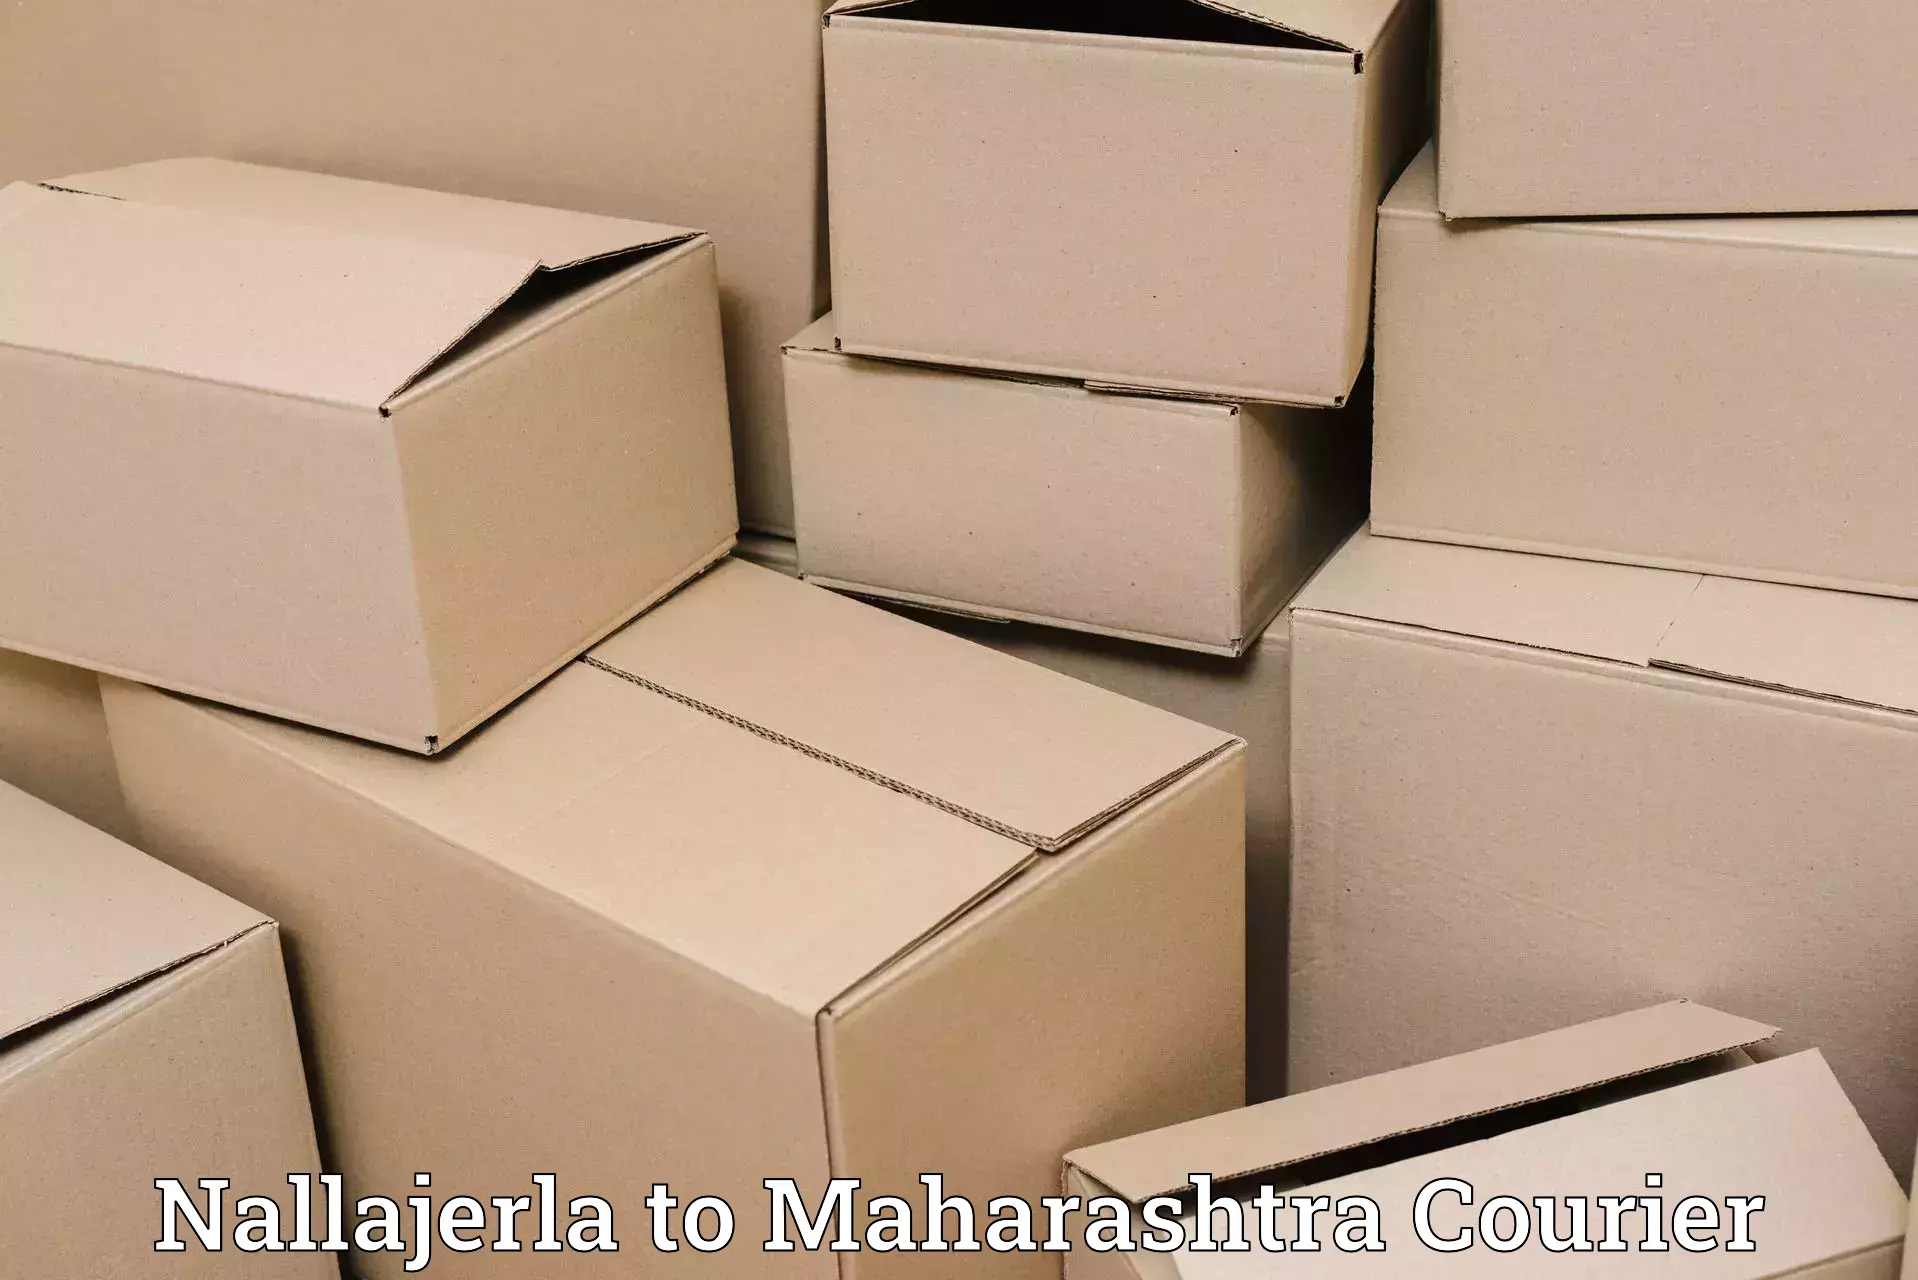 Bulk shipping discounts Nallajerla to Pune